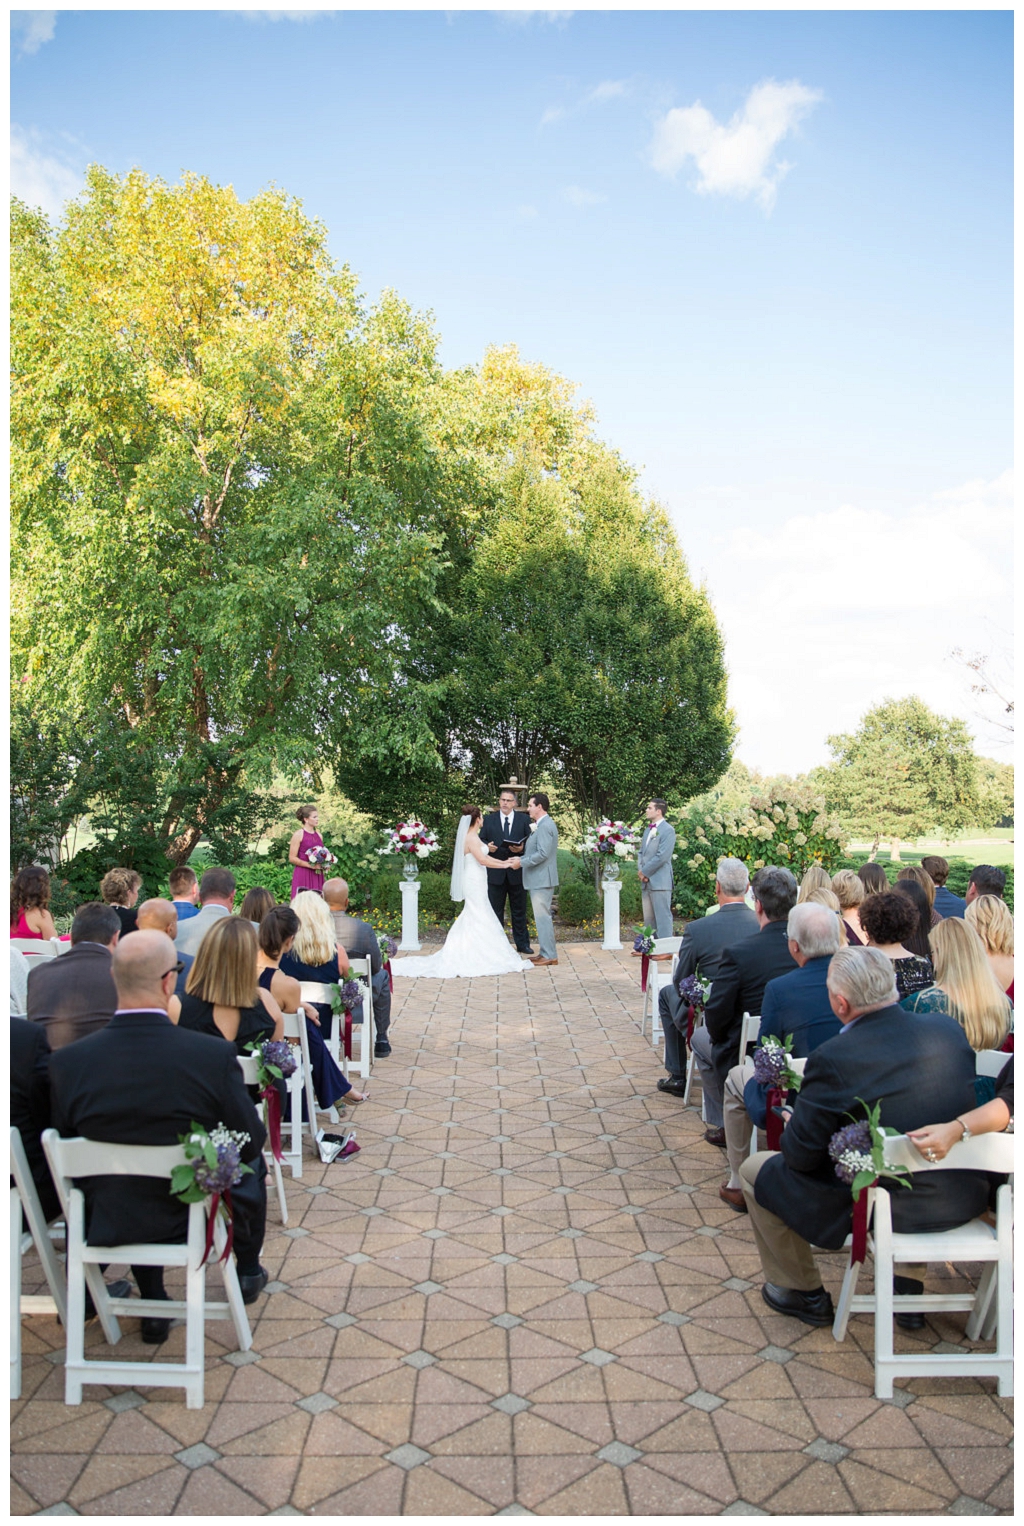 Lexington Wedding Photography - Ann & David's Elegant Outdoor Wedding